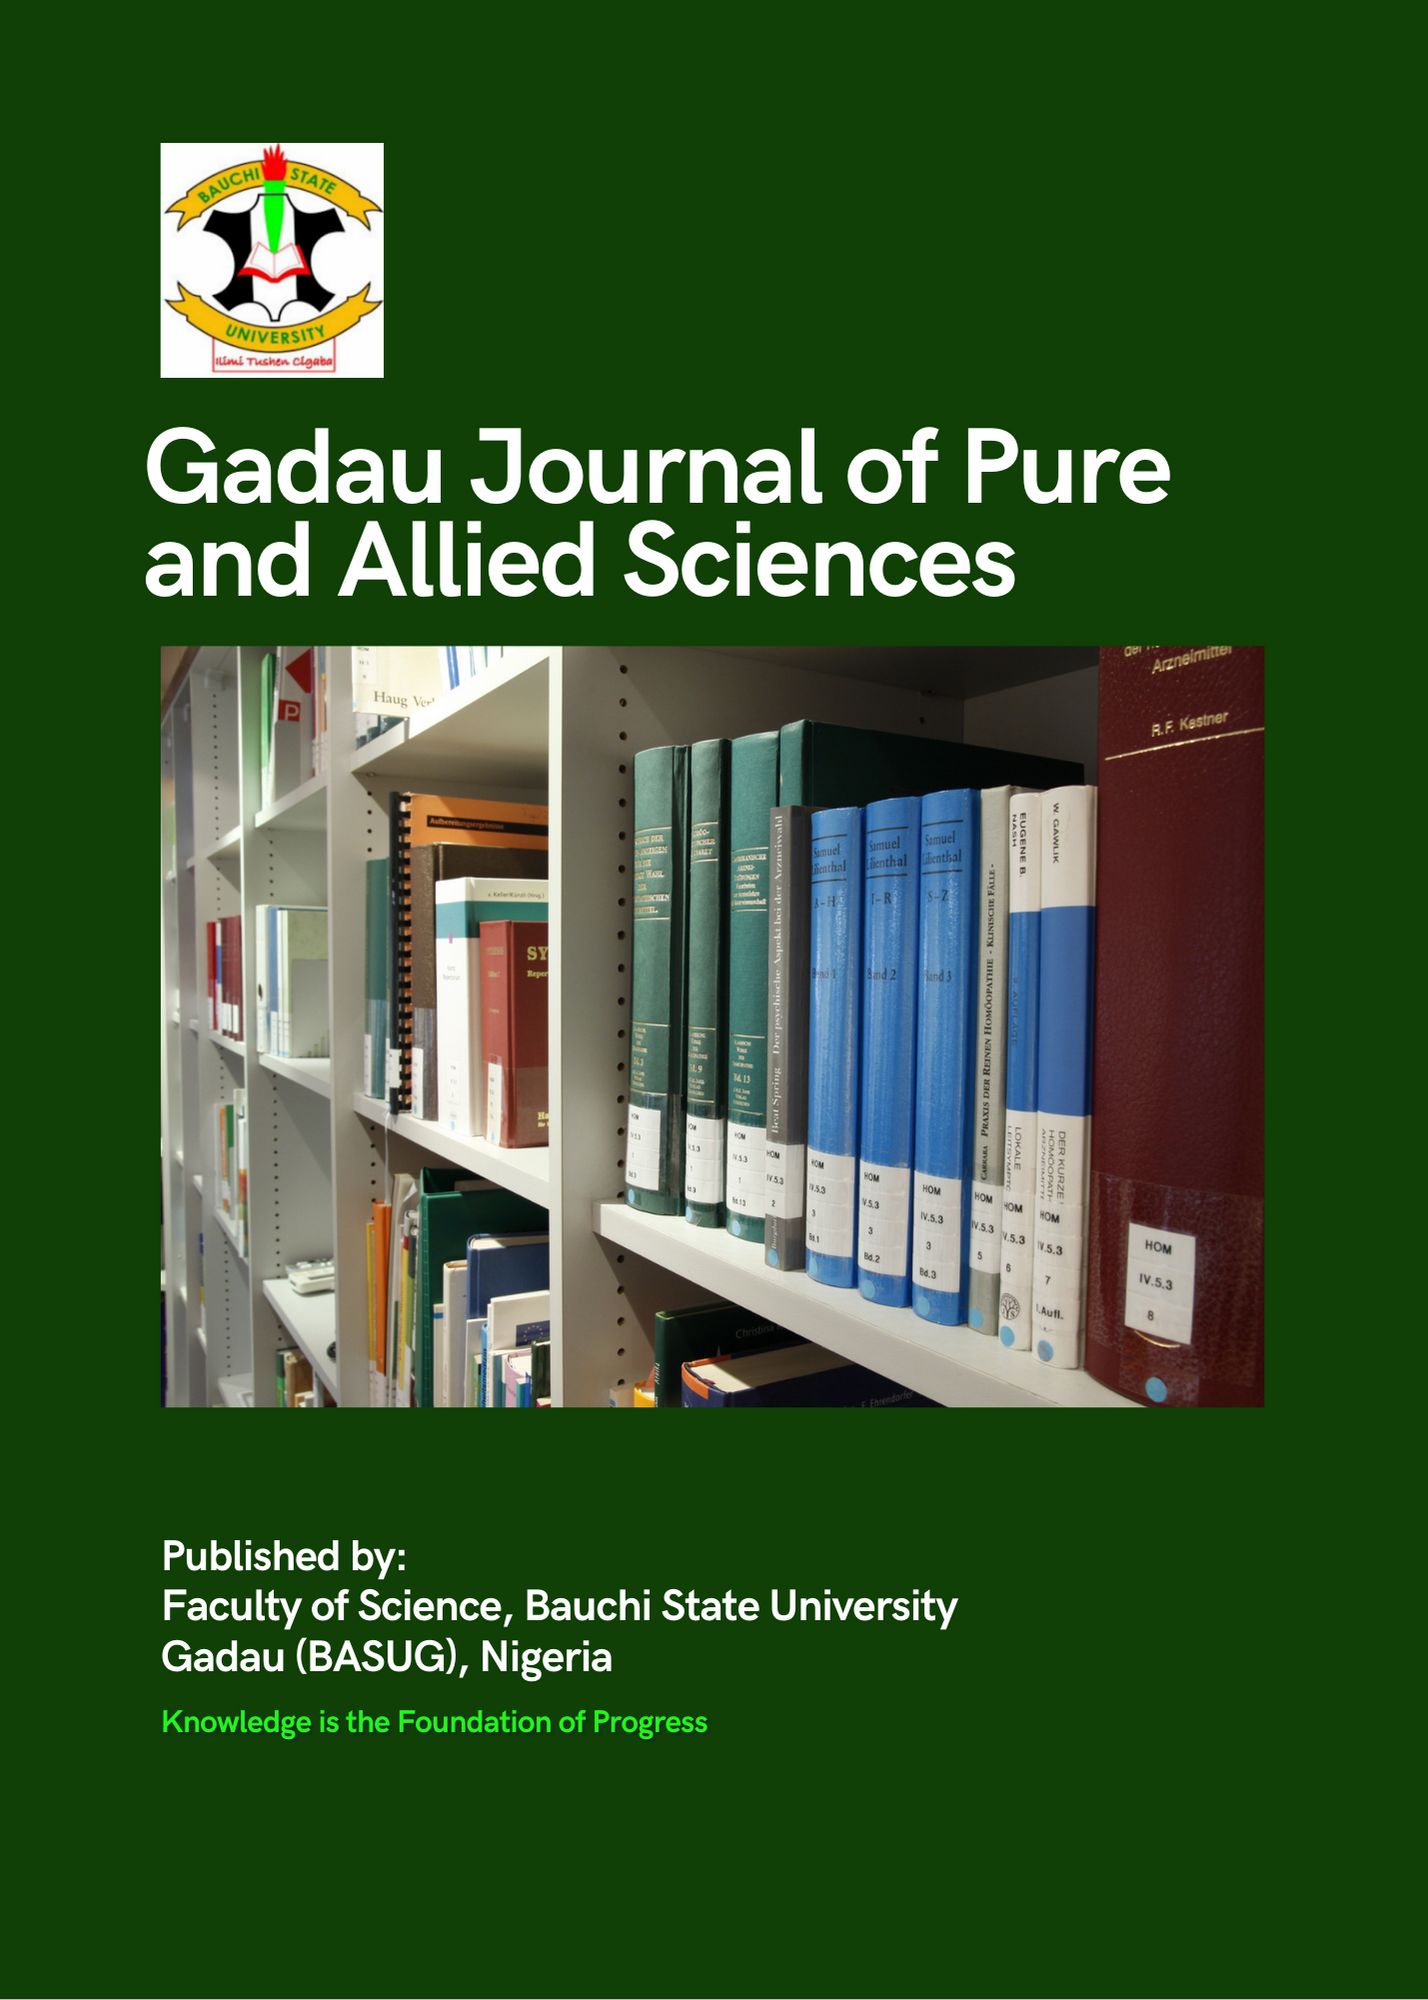 Gadau Journal of Pure and Allied Sciences (GJPAS)